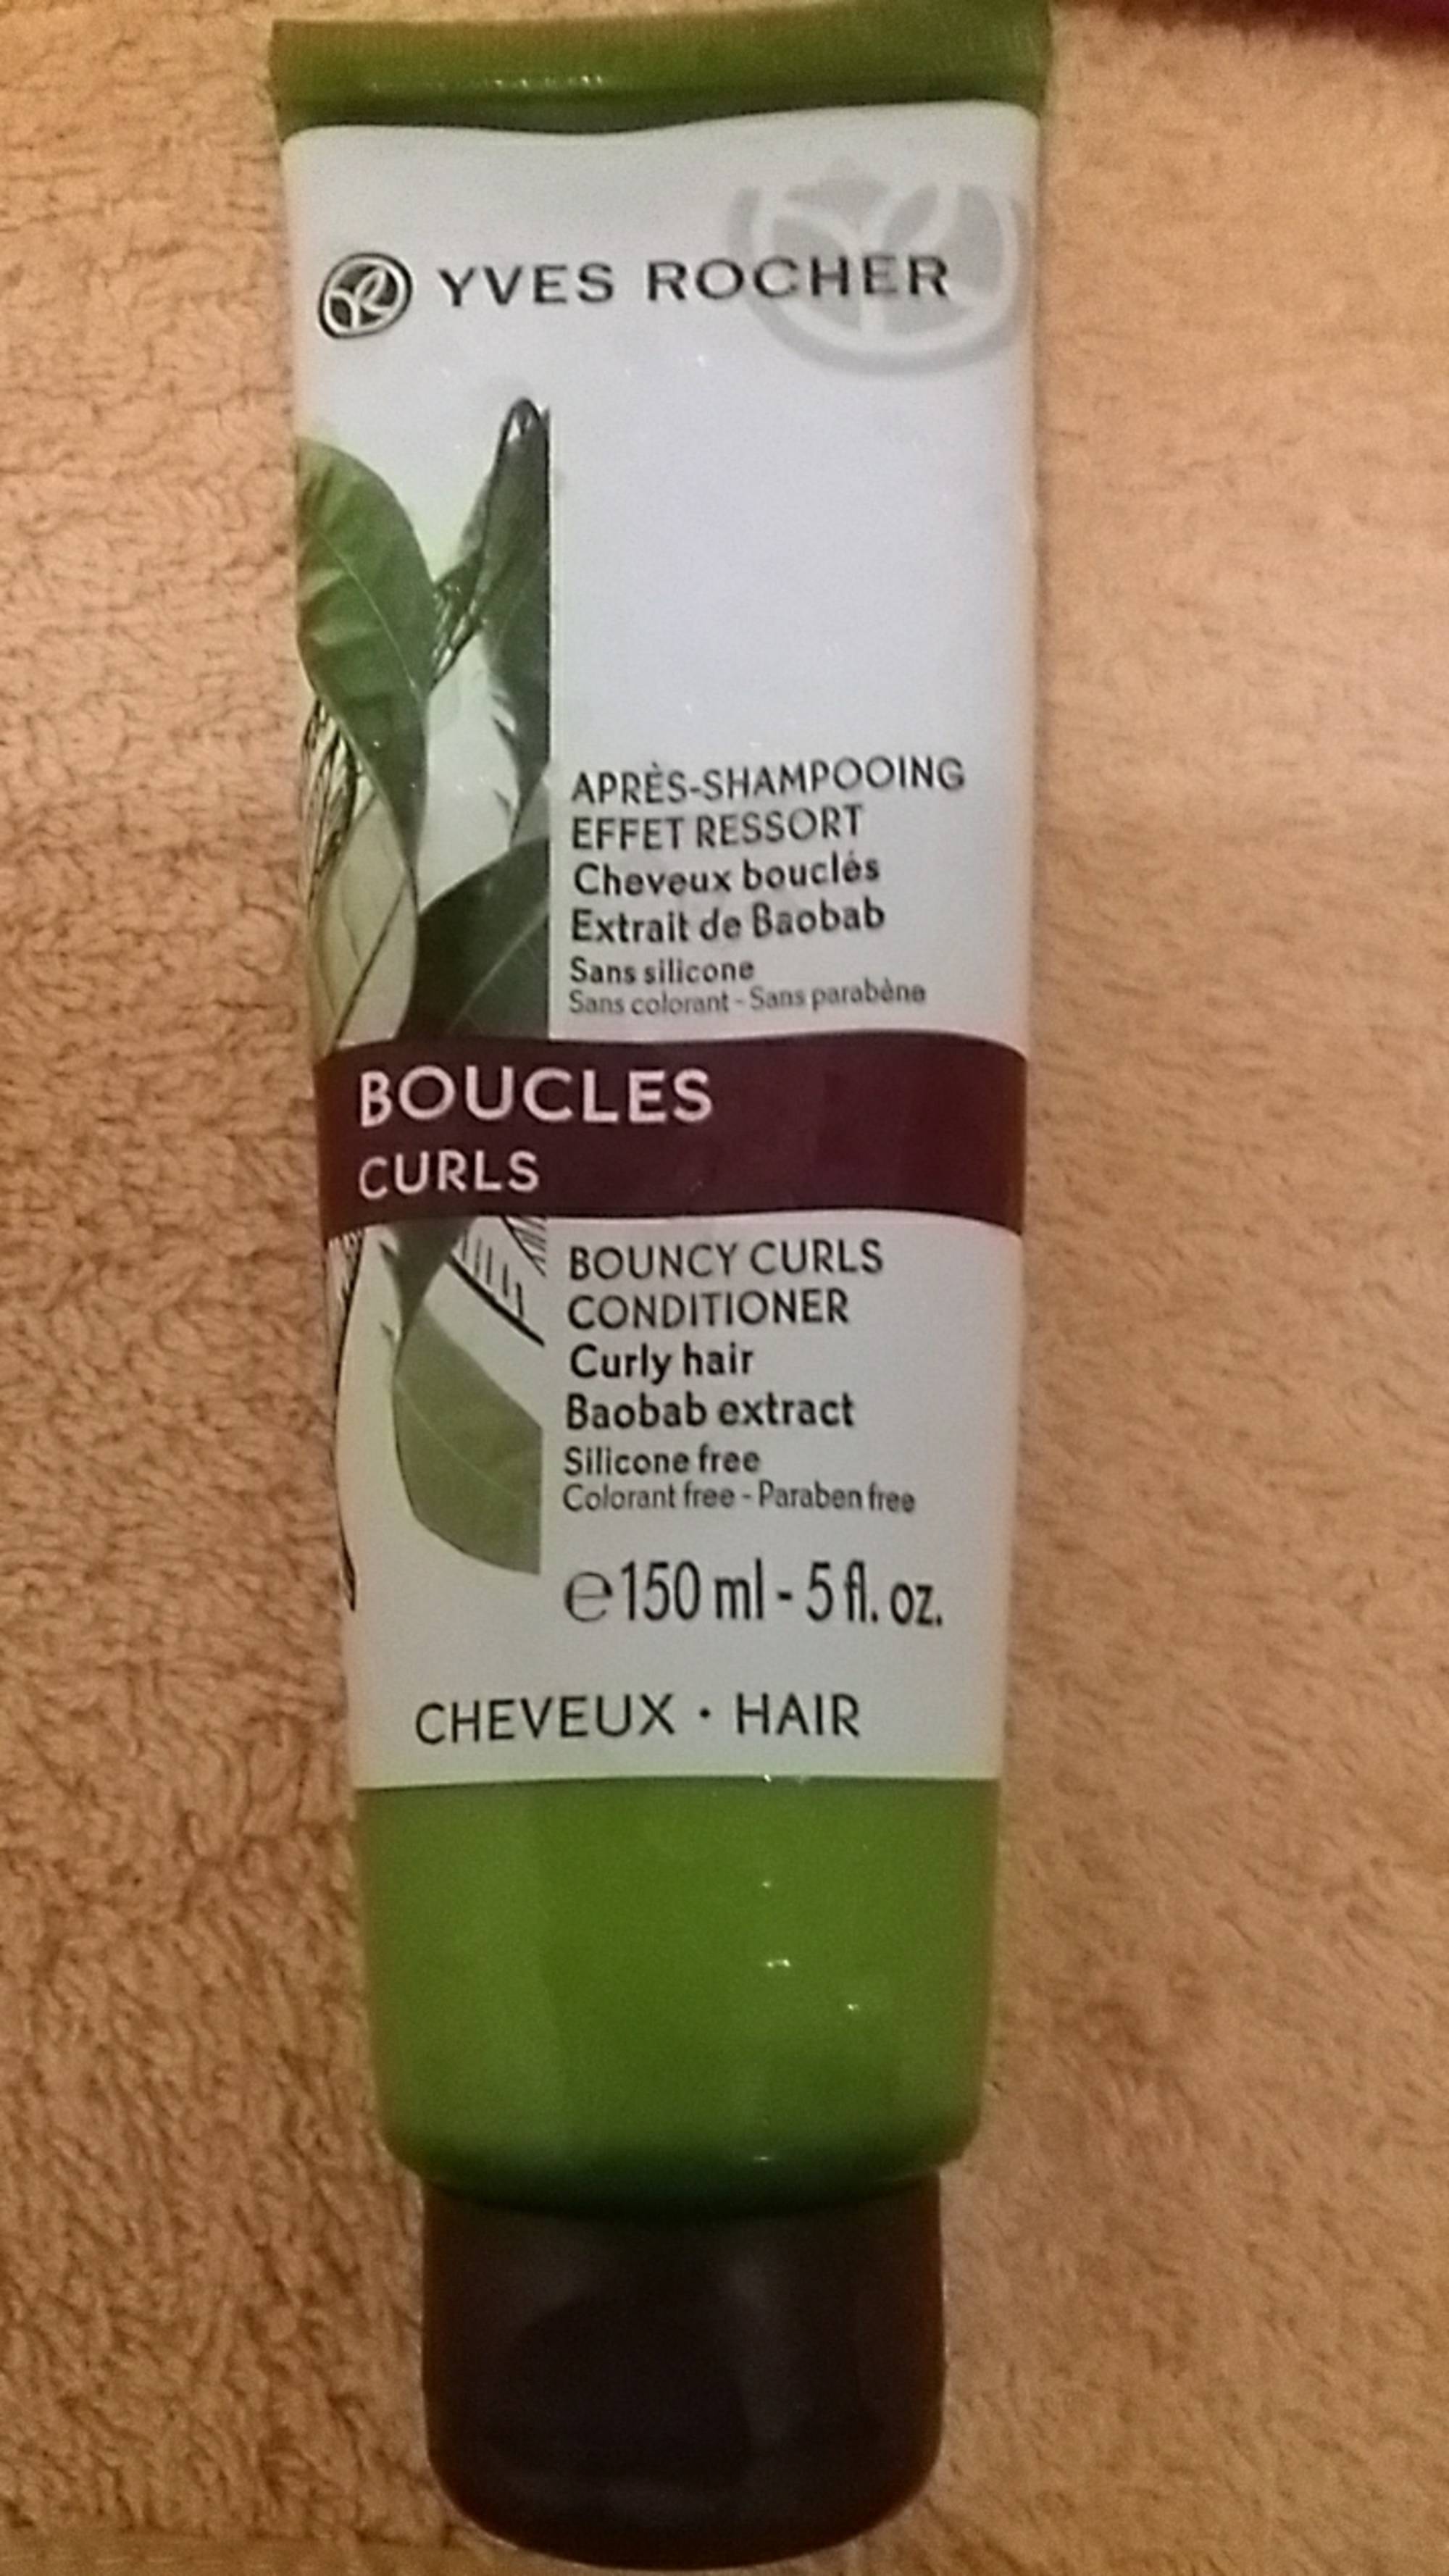 YVES ROCHER - Boucles curls - Après-shampooing effet ressort